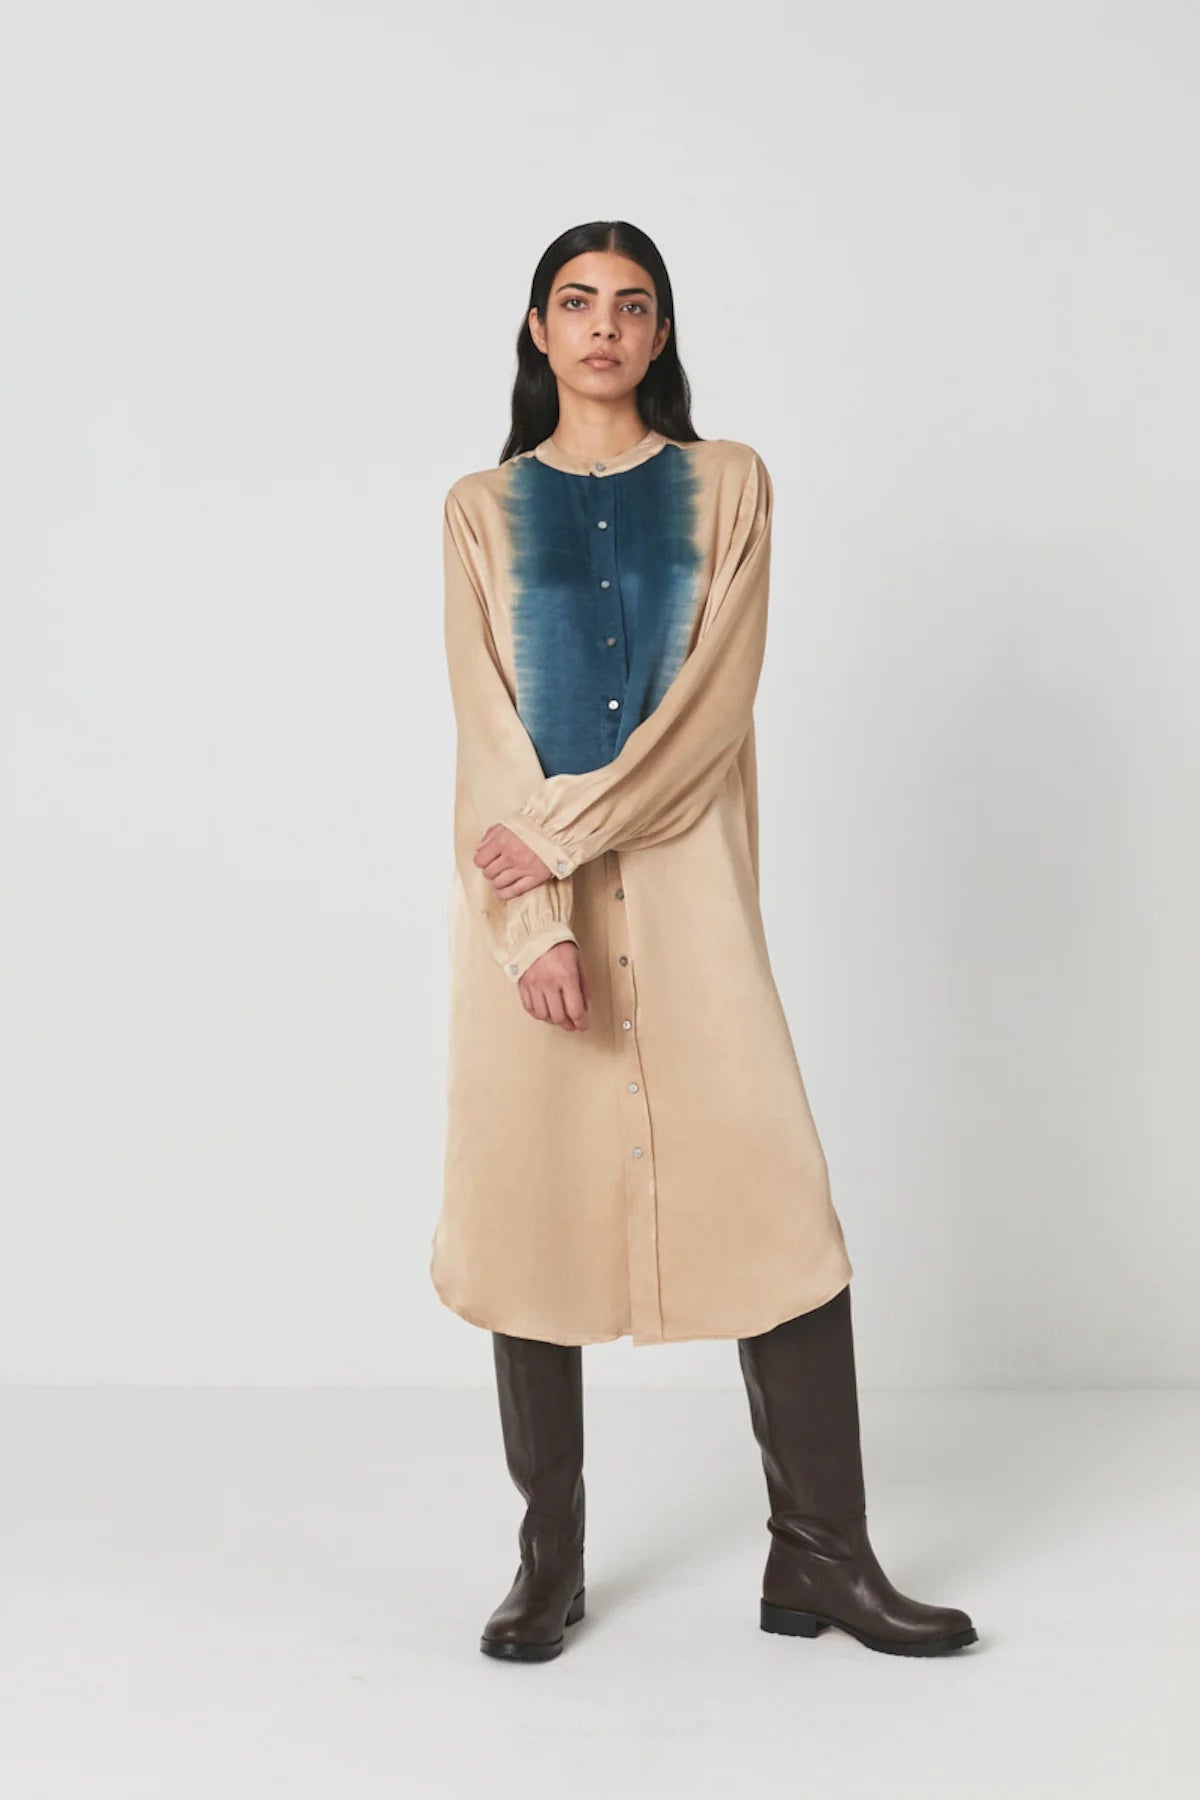 Rabens Saloner Suffi Streamline Shirt Dress - Oatmeal/Teal